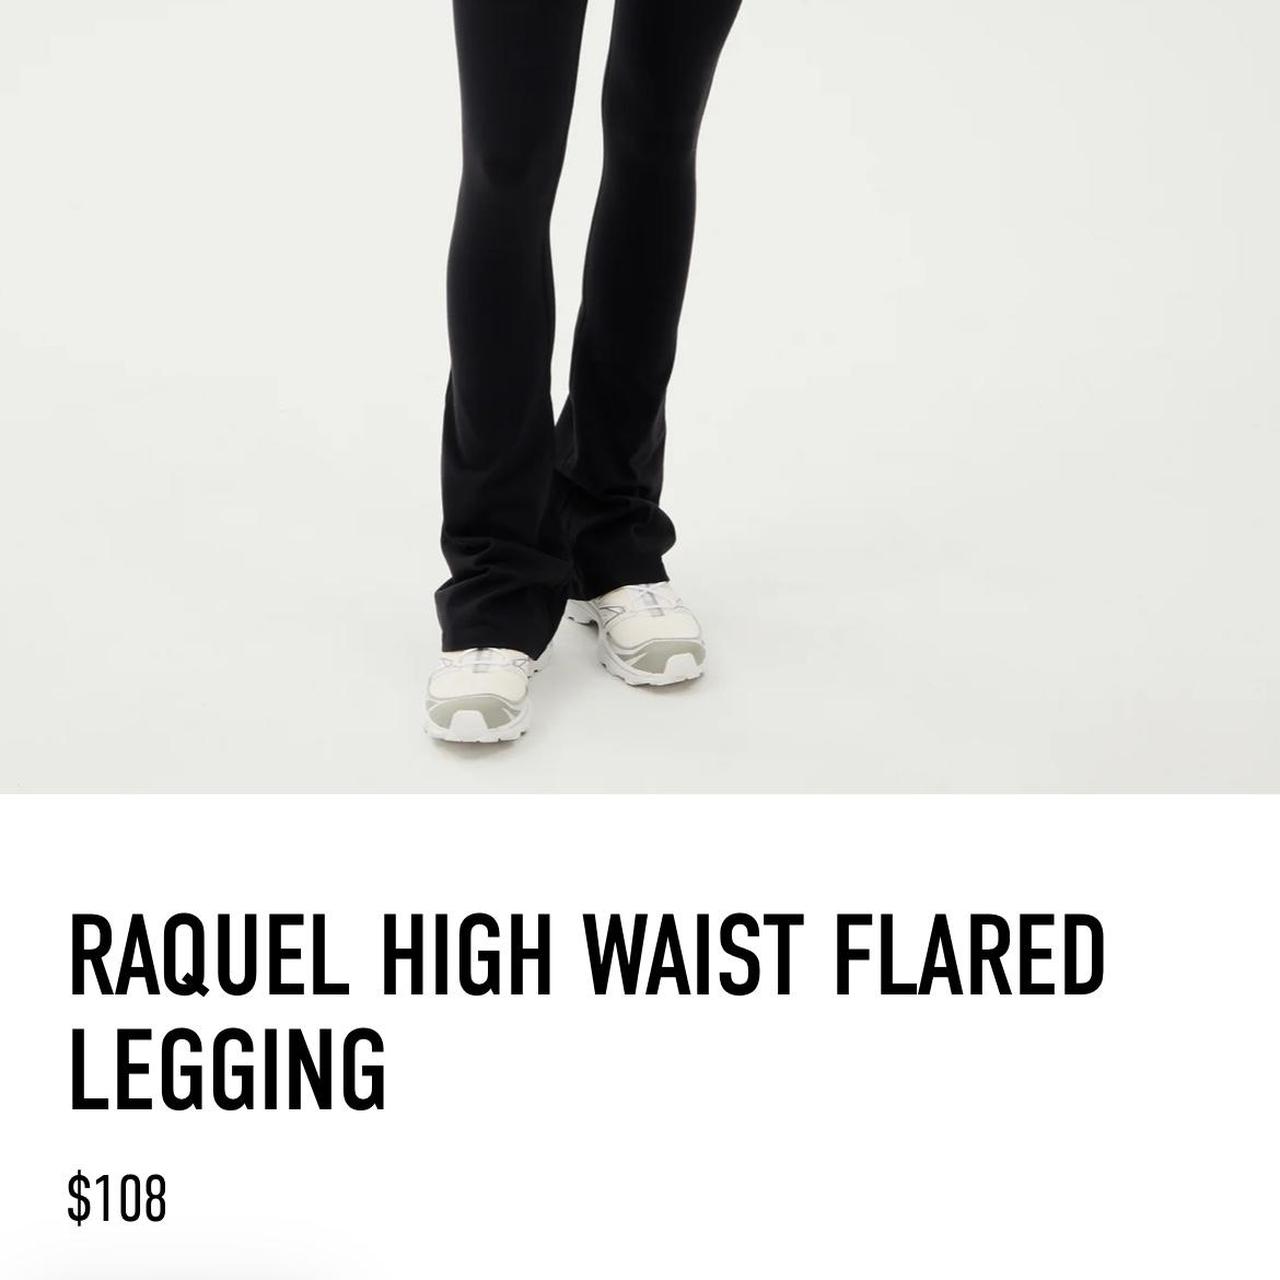 Splits59 Raquel High Waist Flare Legging in Black, White